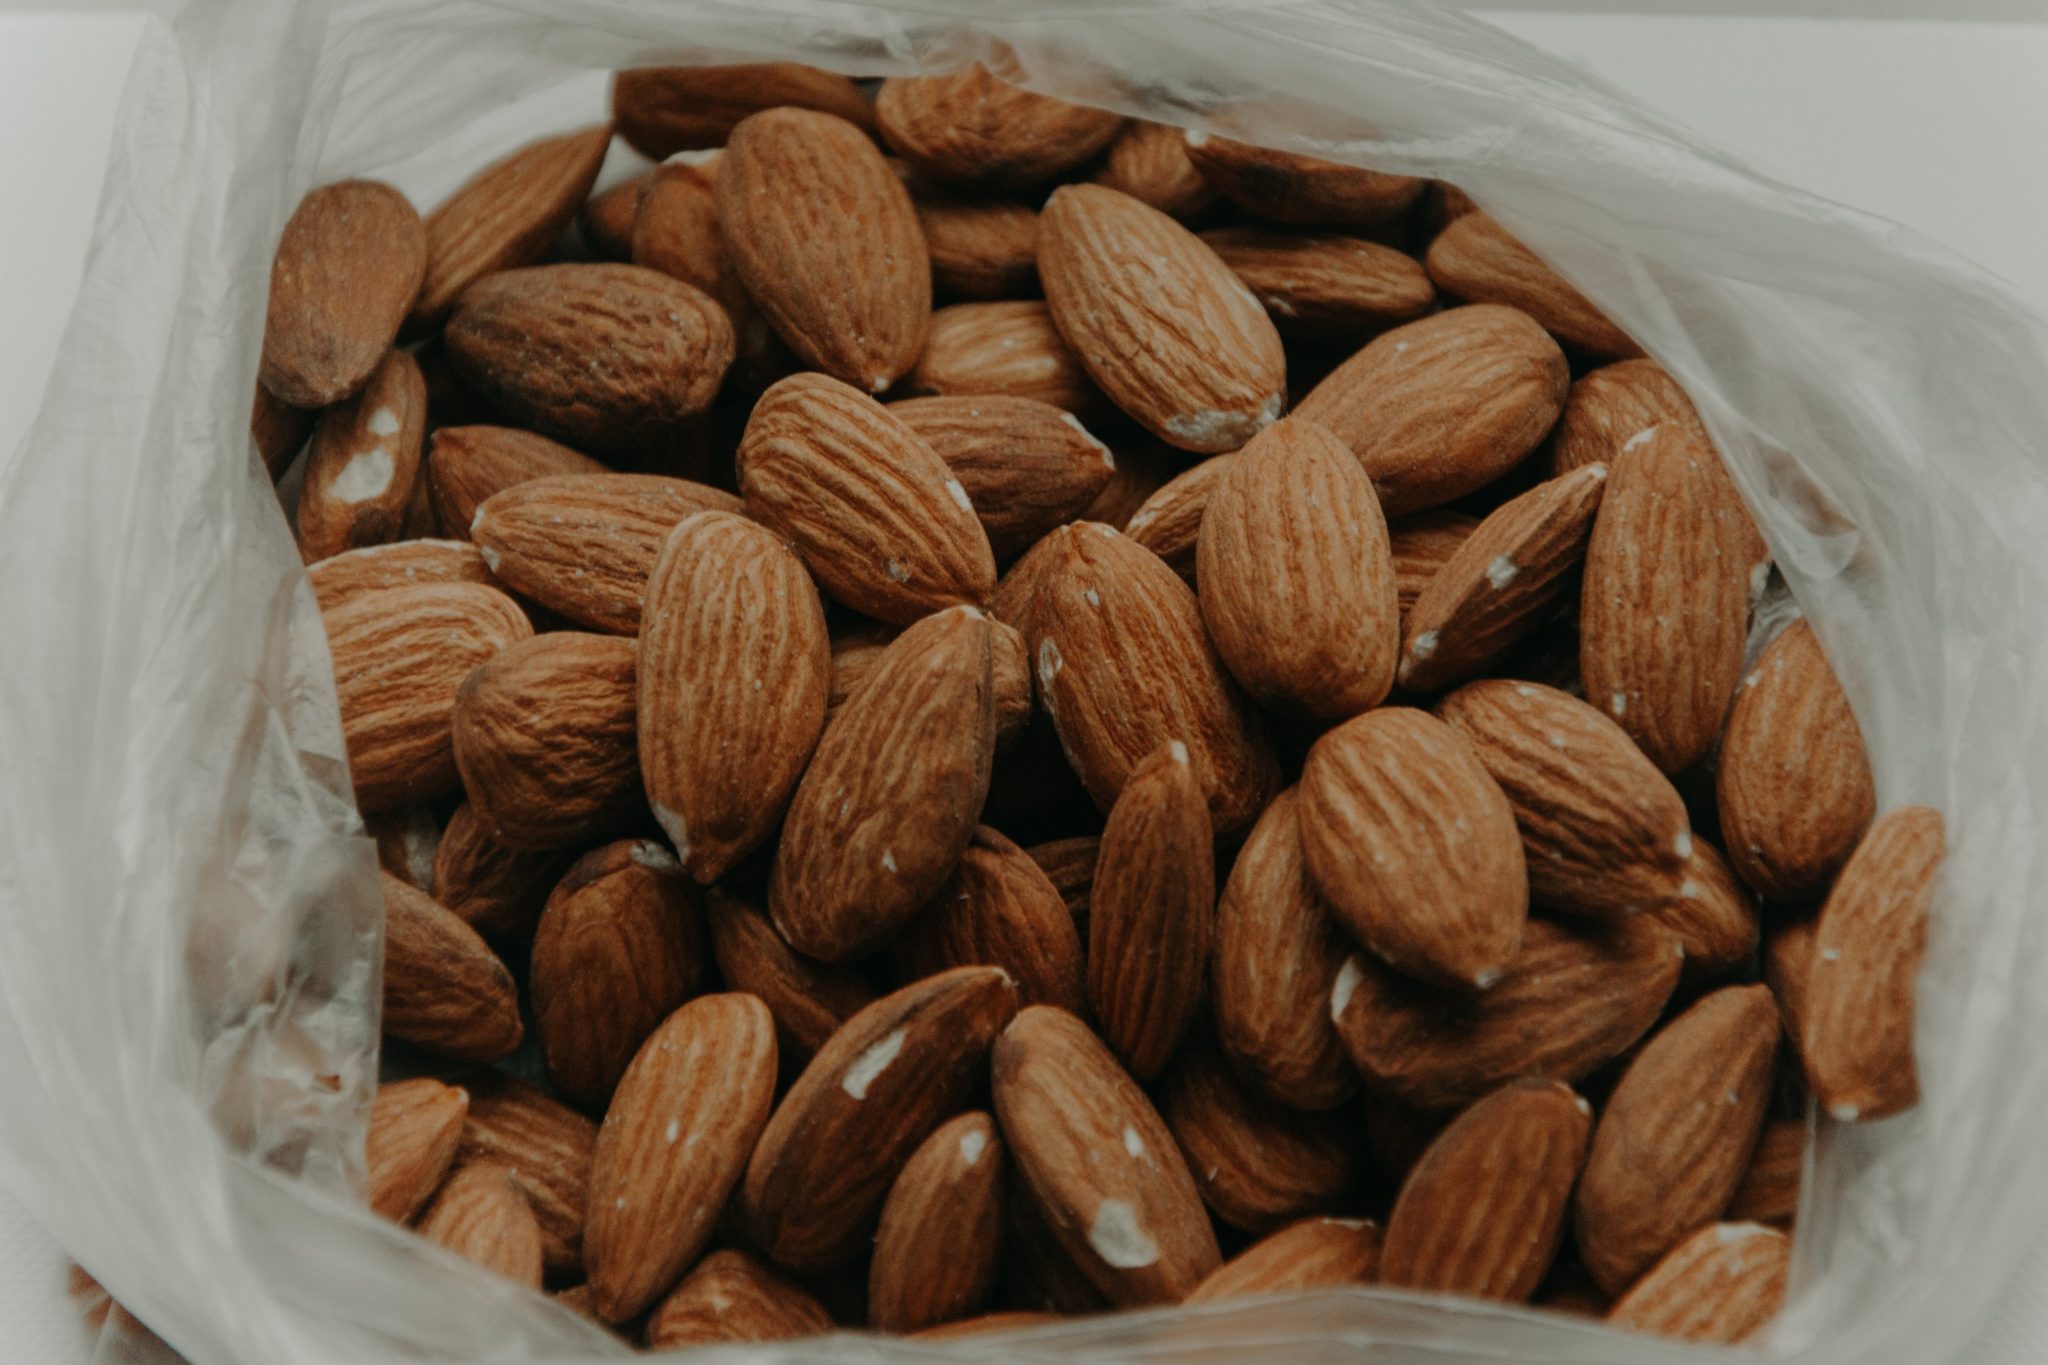 Eat magnesium rich almonds